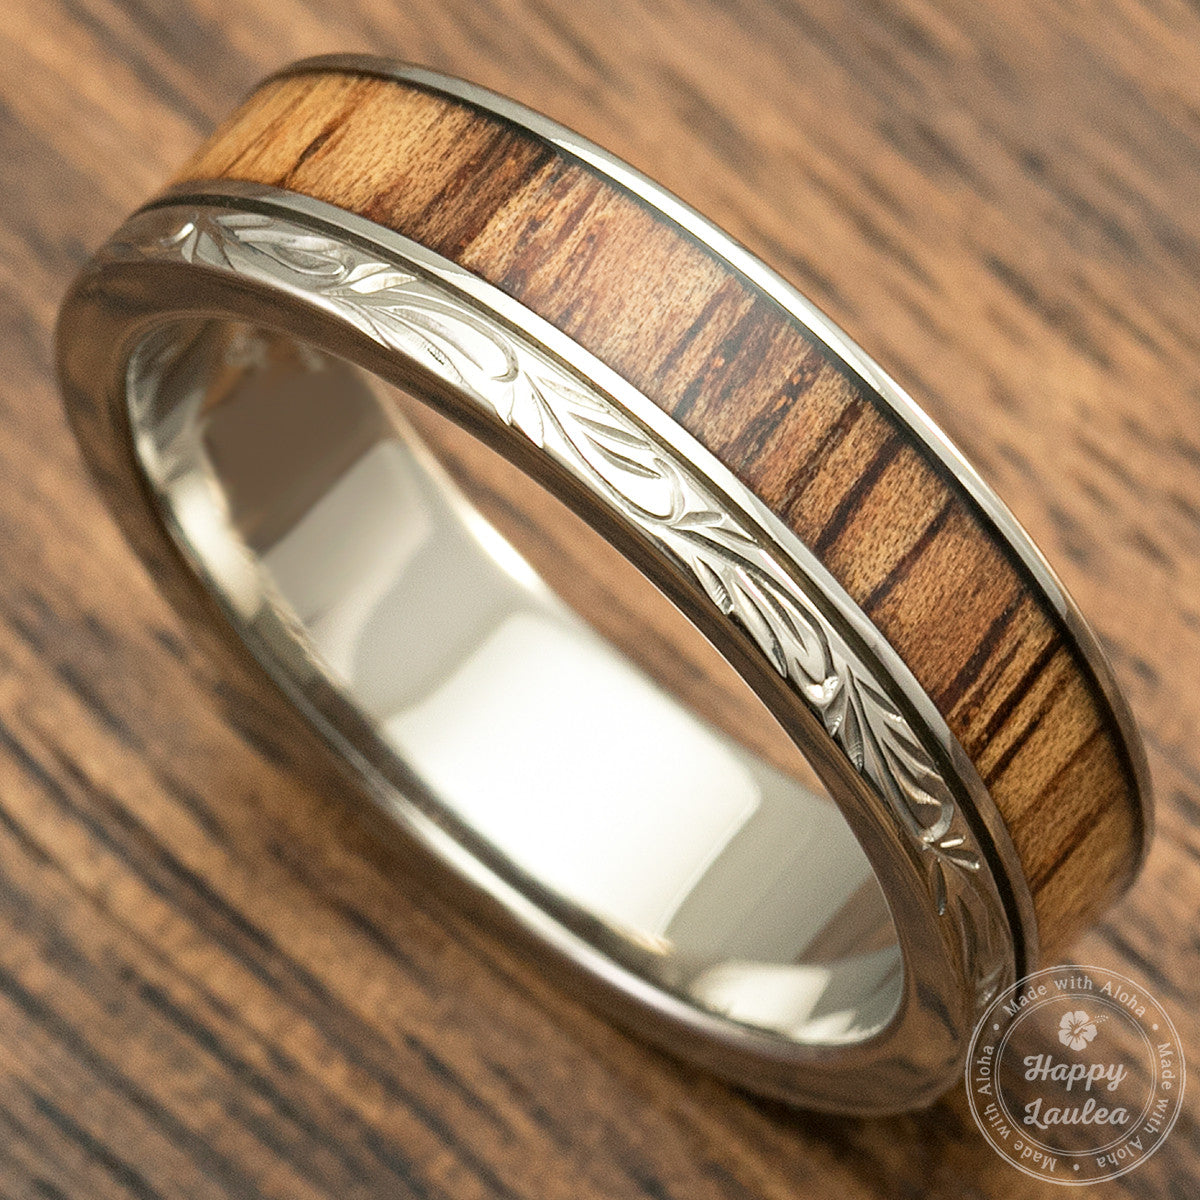 Titanium Hand Engraved Ring with Hawaiian Koa Wood Inlay - 6mm, Flat Shaped, Standard Fitment